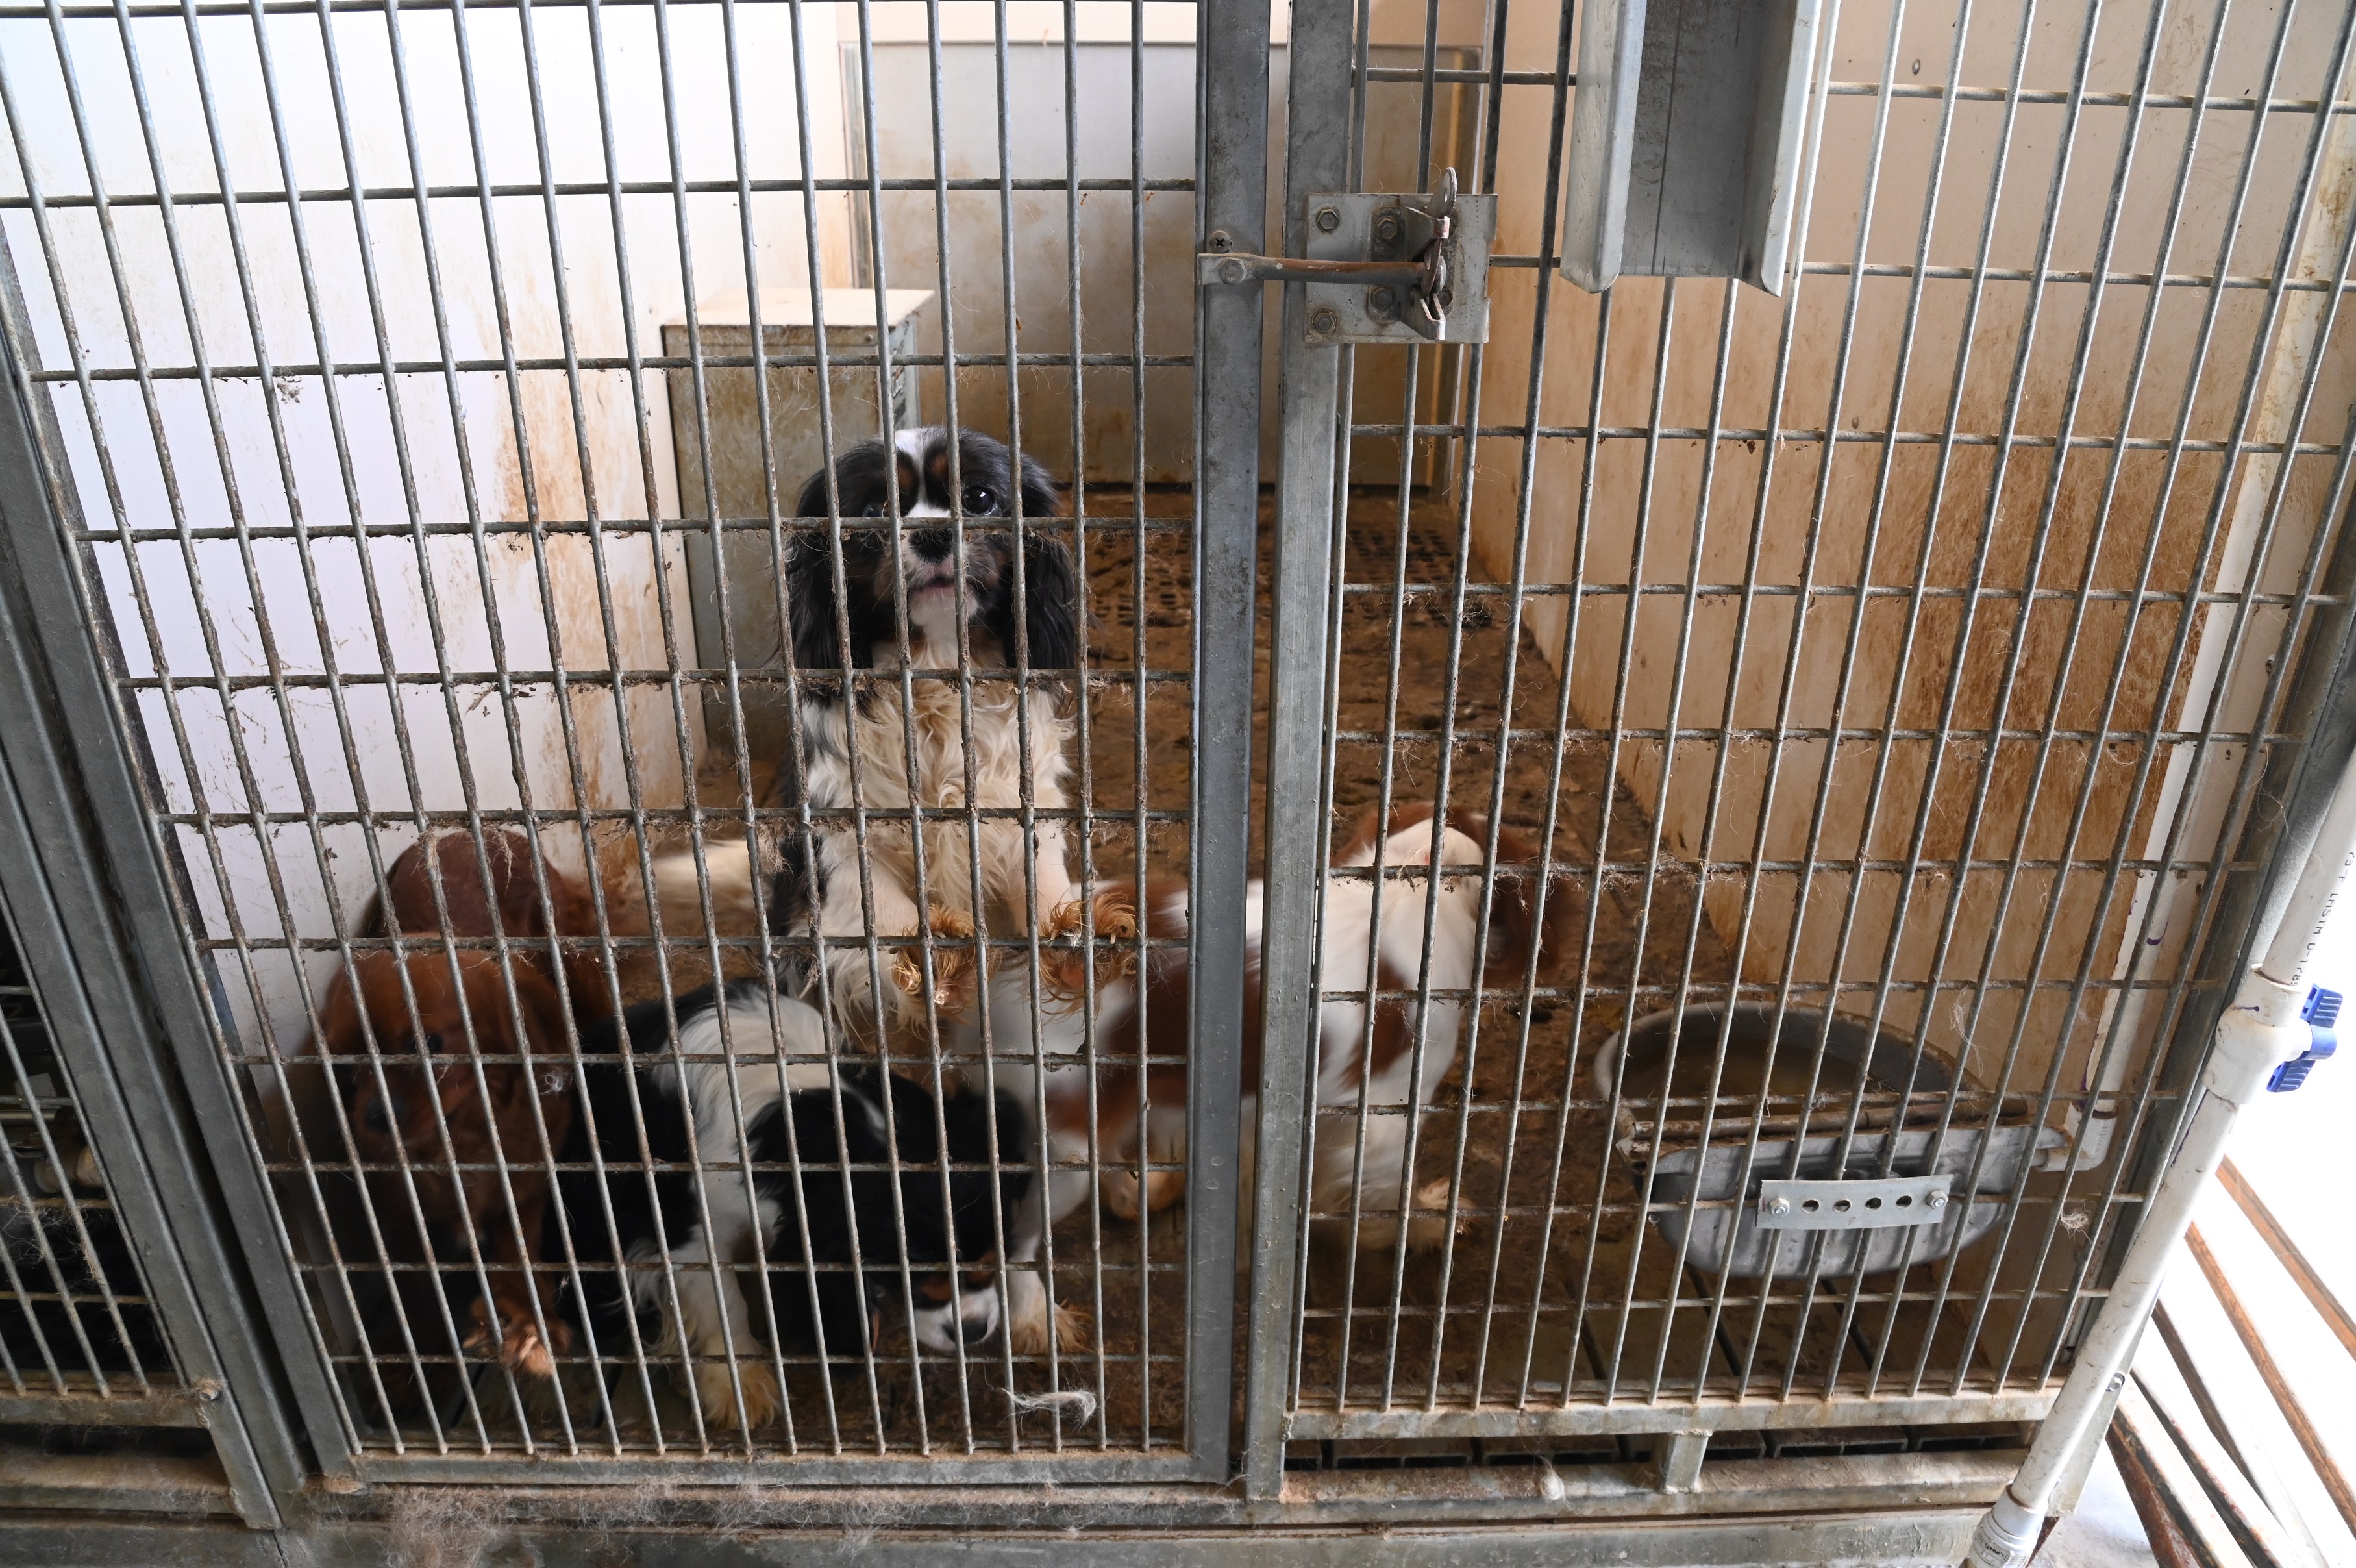 Authorities rescue 83 dogs kept in 'deplorable' conditions in Utah